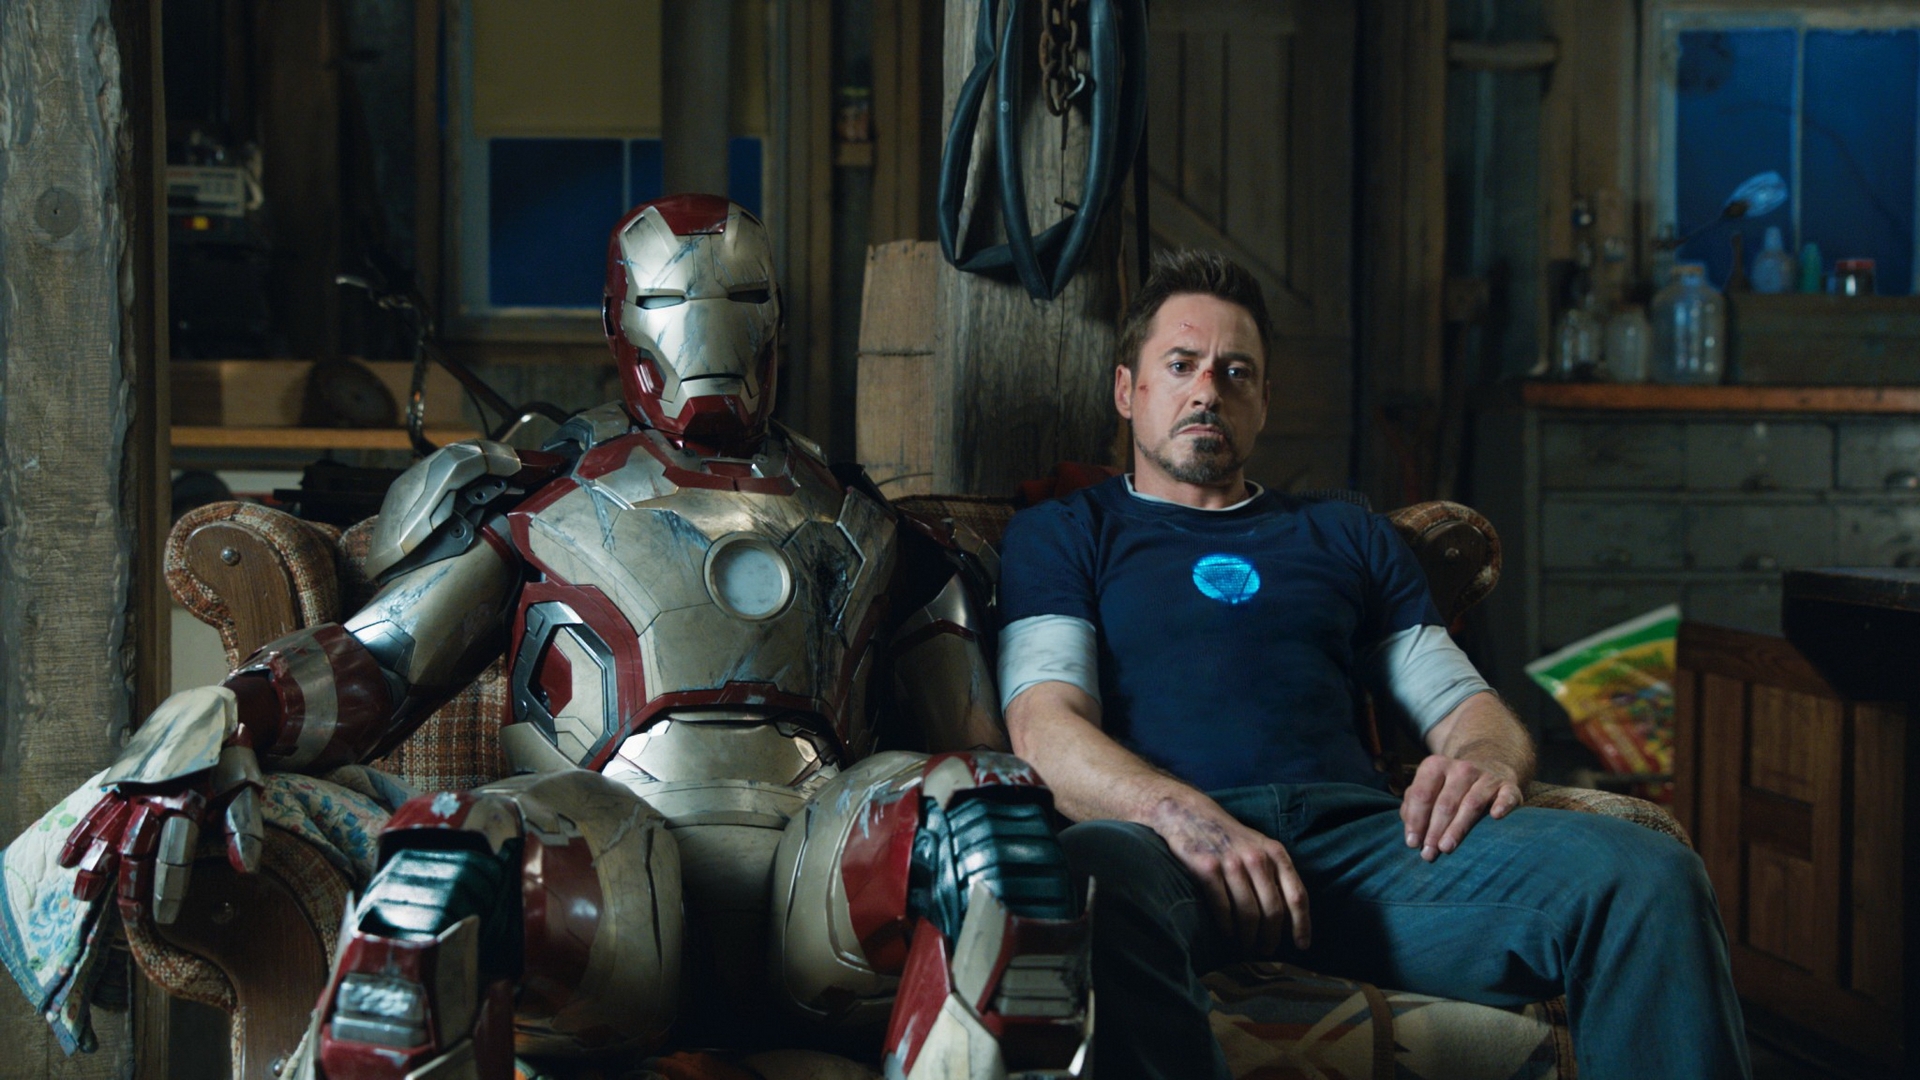 People 1920x1080 Iron Man 3 Robert Downey Jr. Tony Stark Iron Man Marvel Cinematic Universe movies sitting couch film stills men